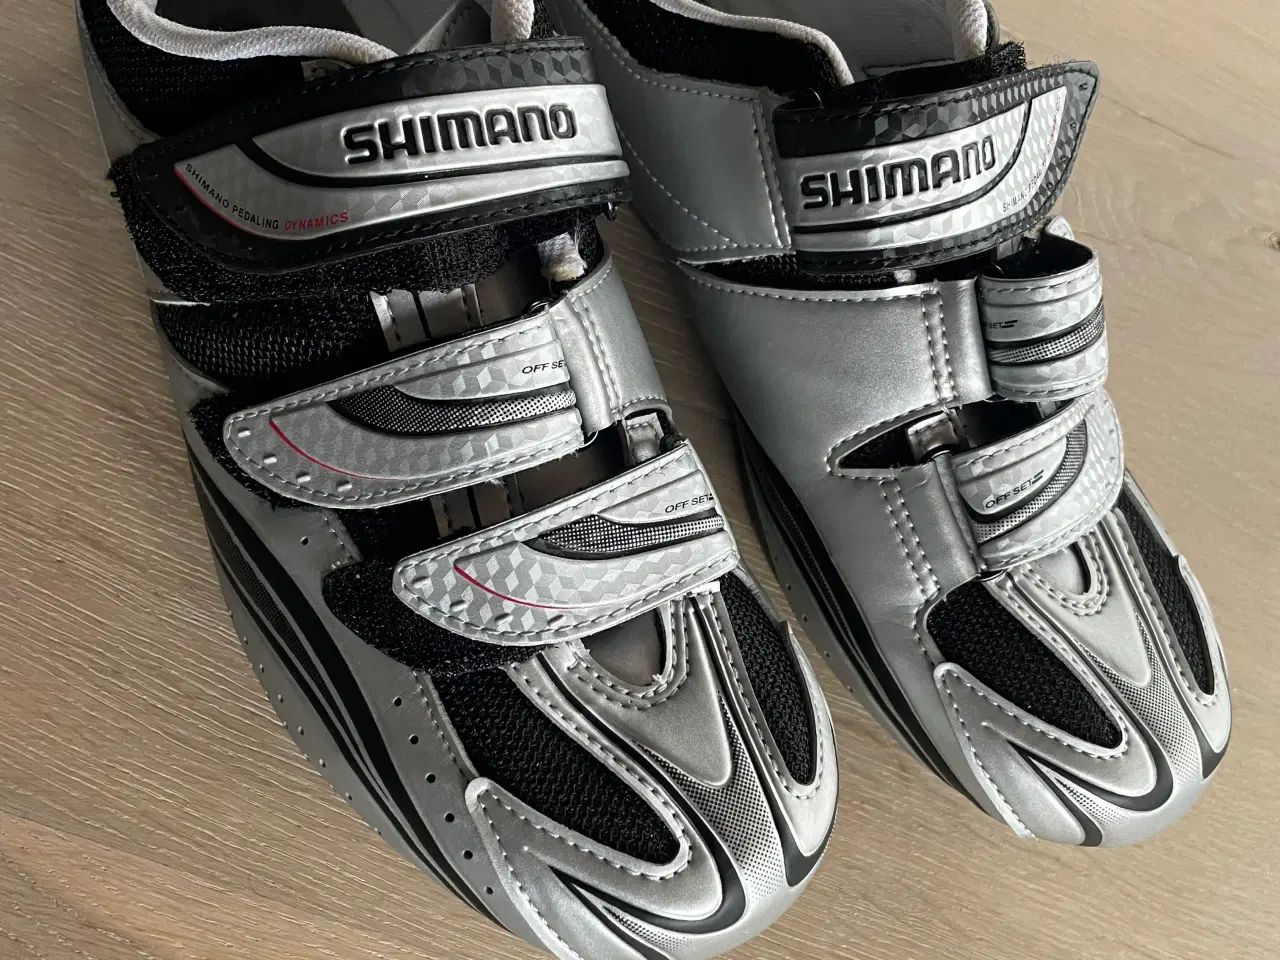 Billede 1 - Shimano sko, nye